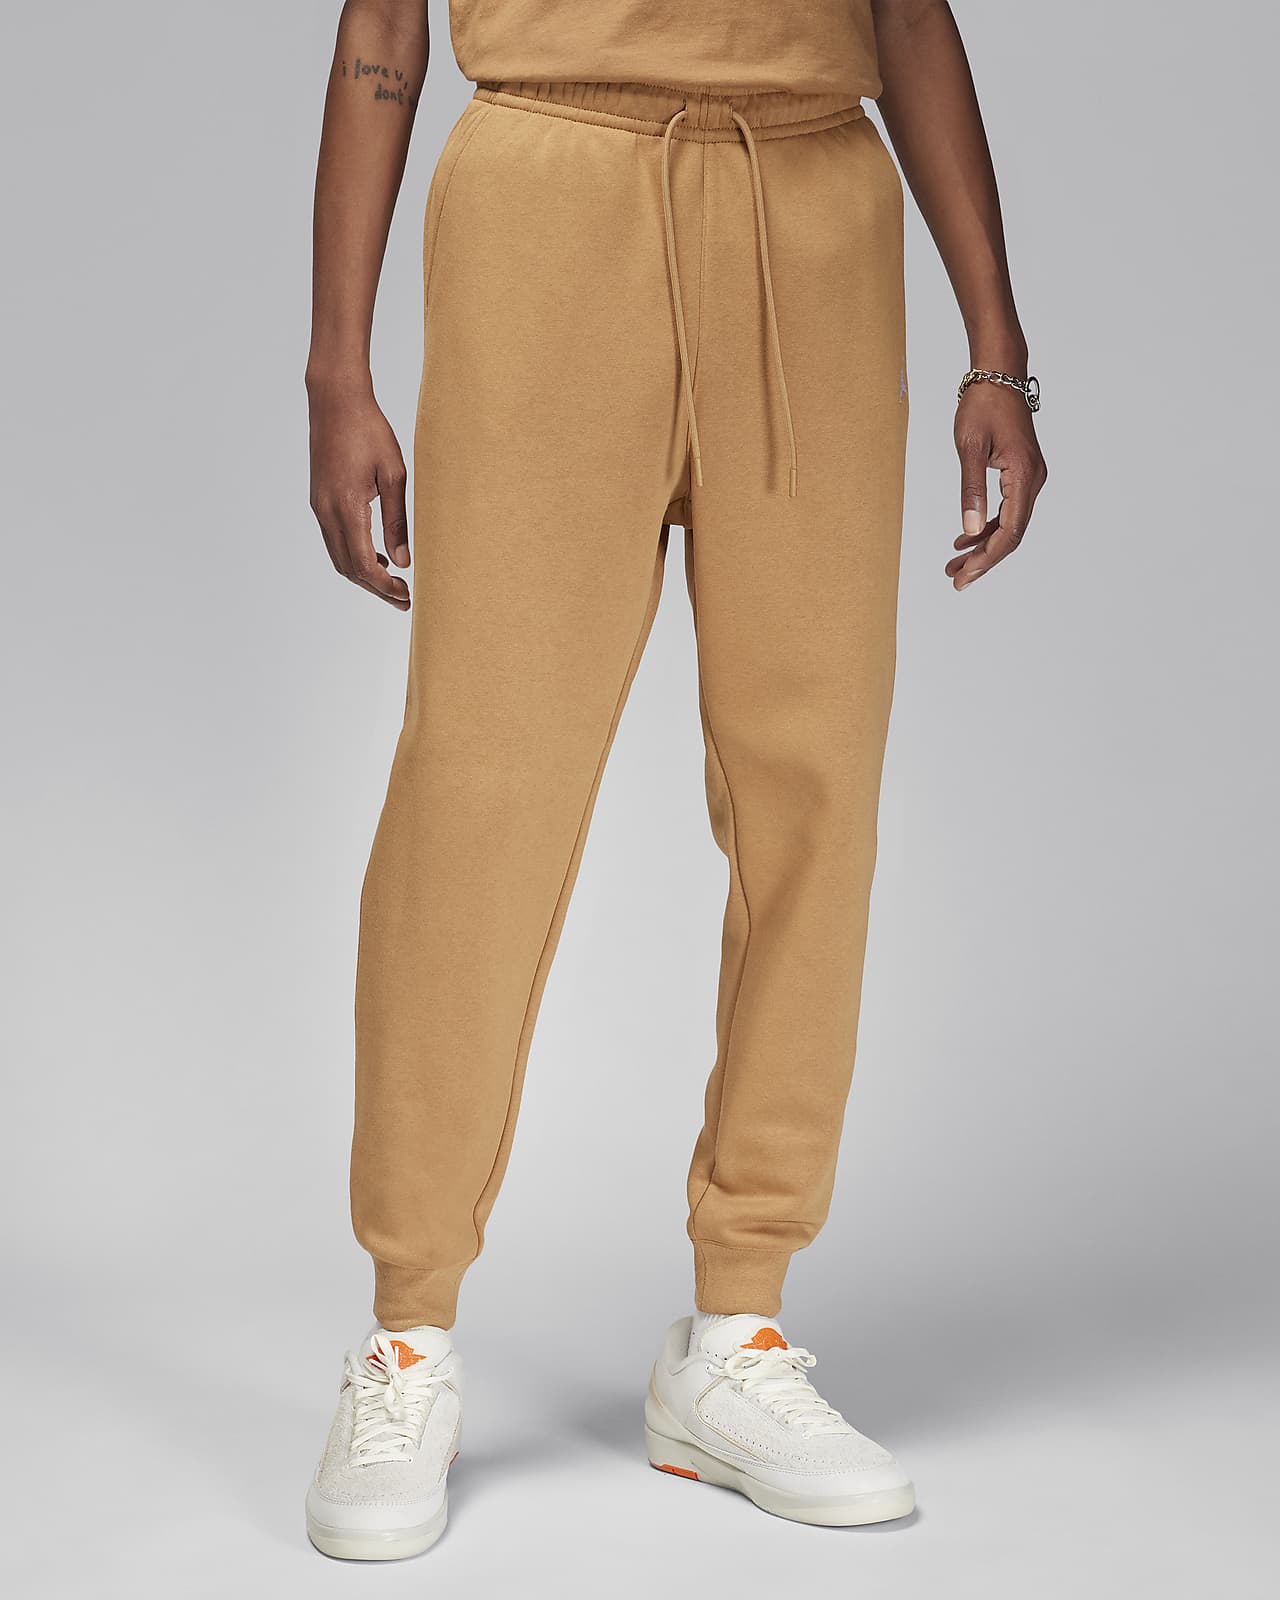 Jordan Brooklyn Fleece Pantalons de xandall - Home